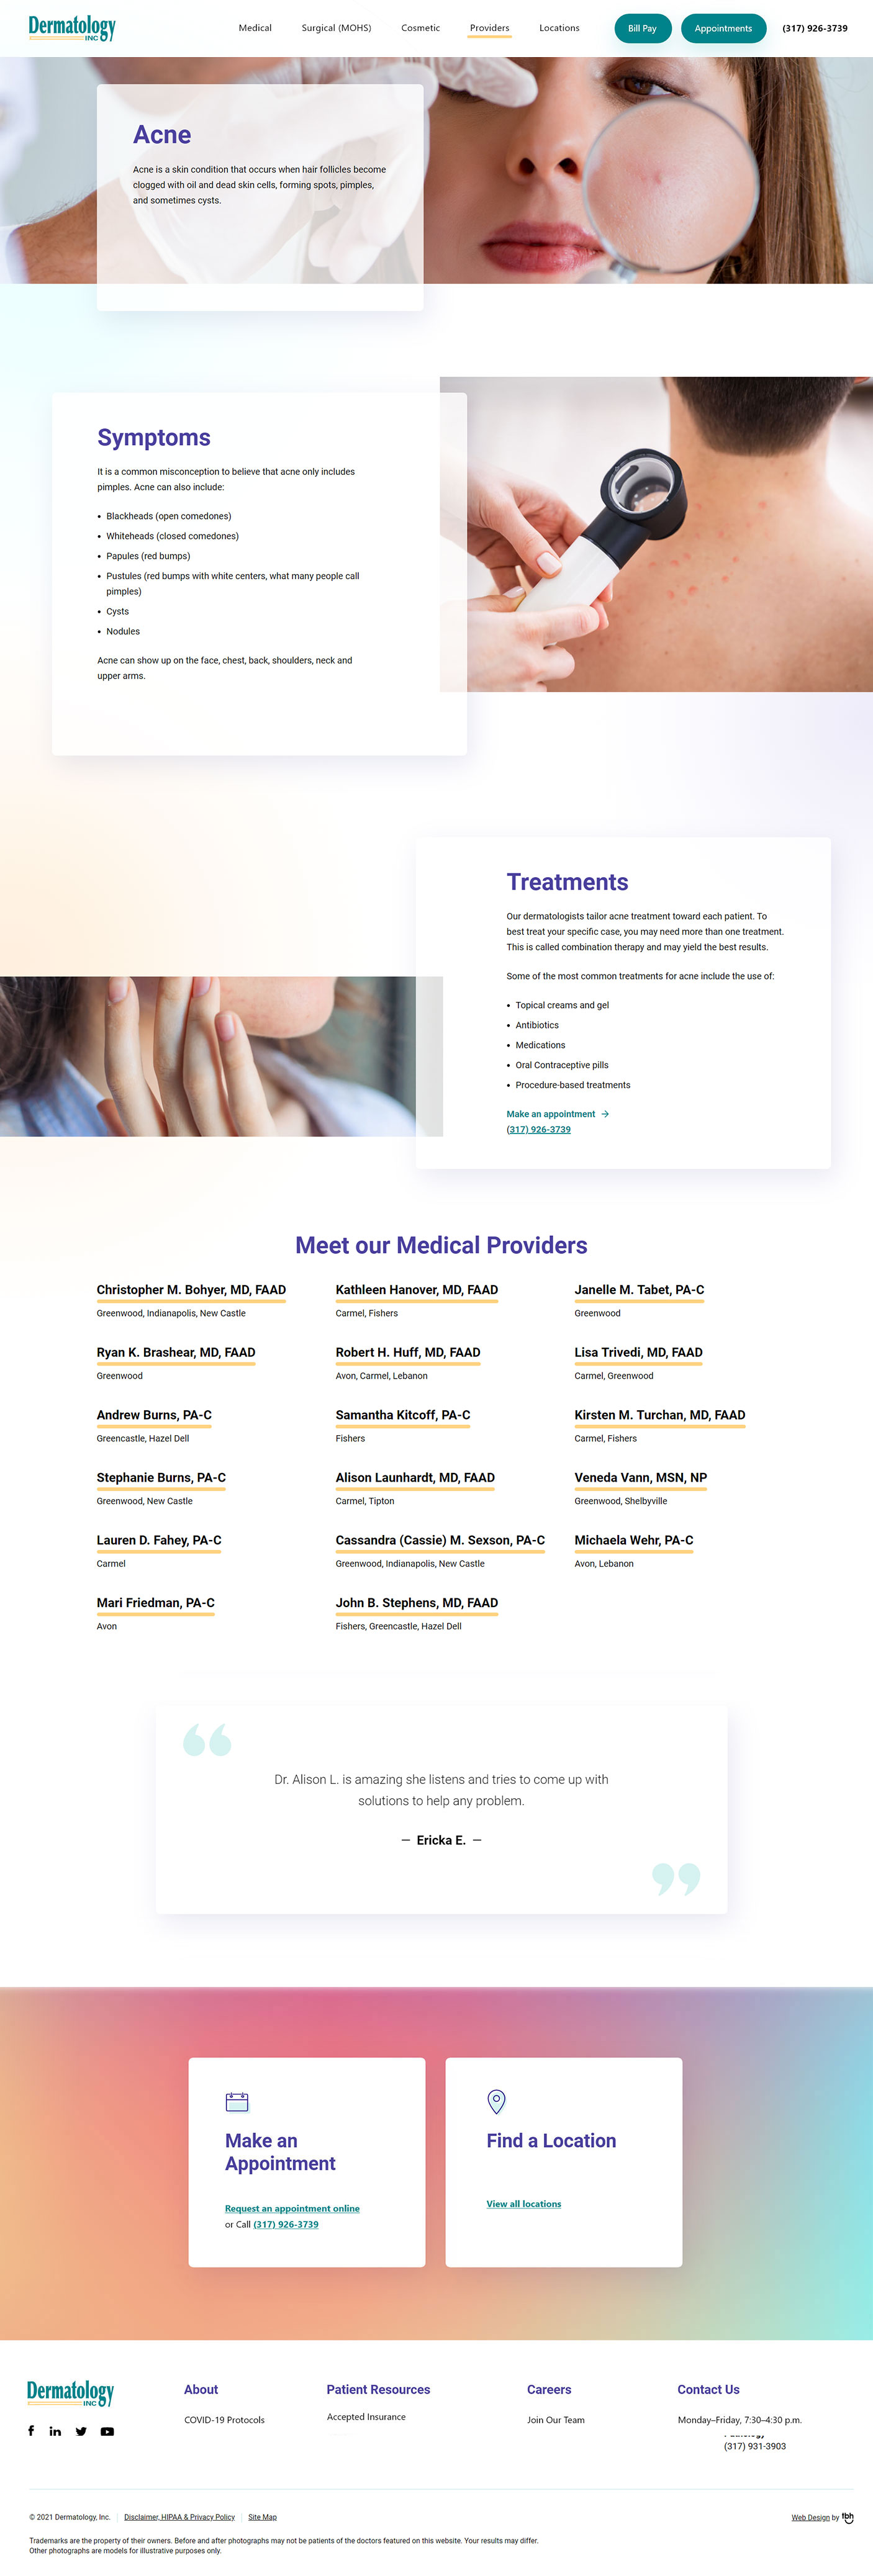 Acne medical service webpage